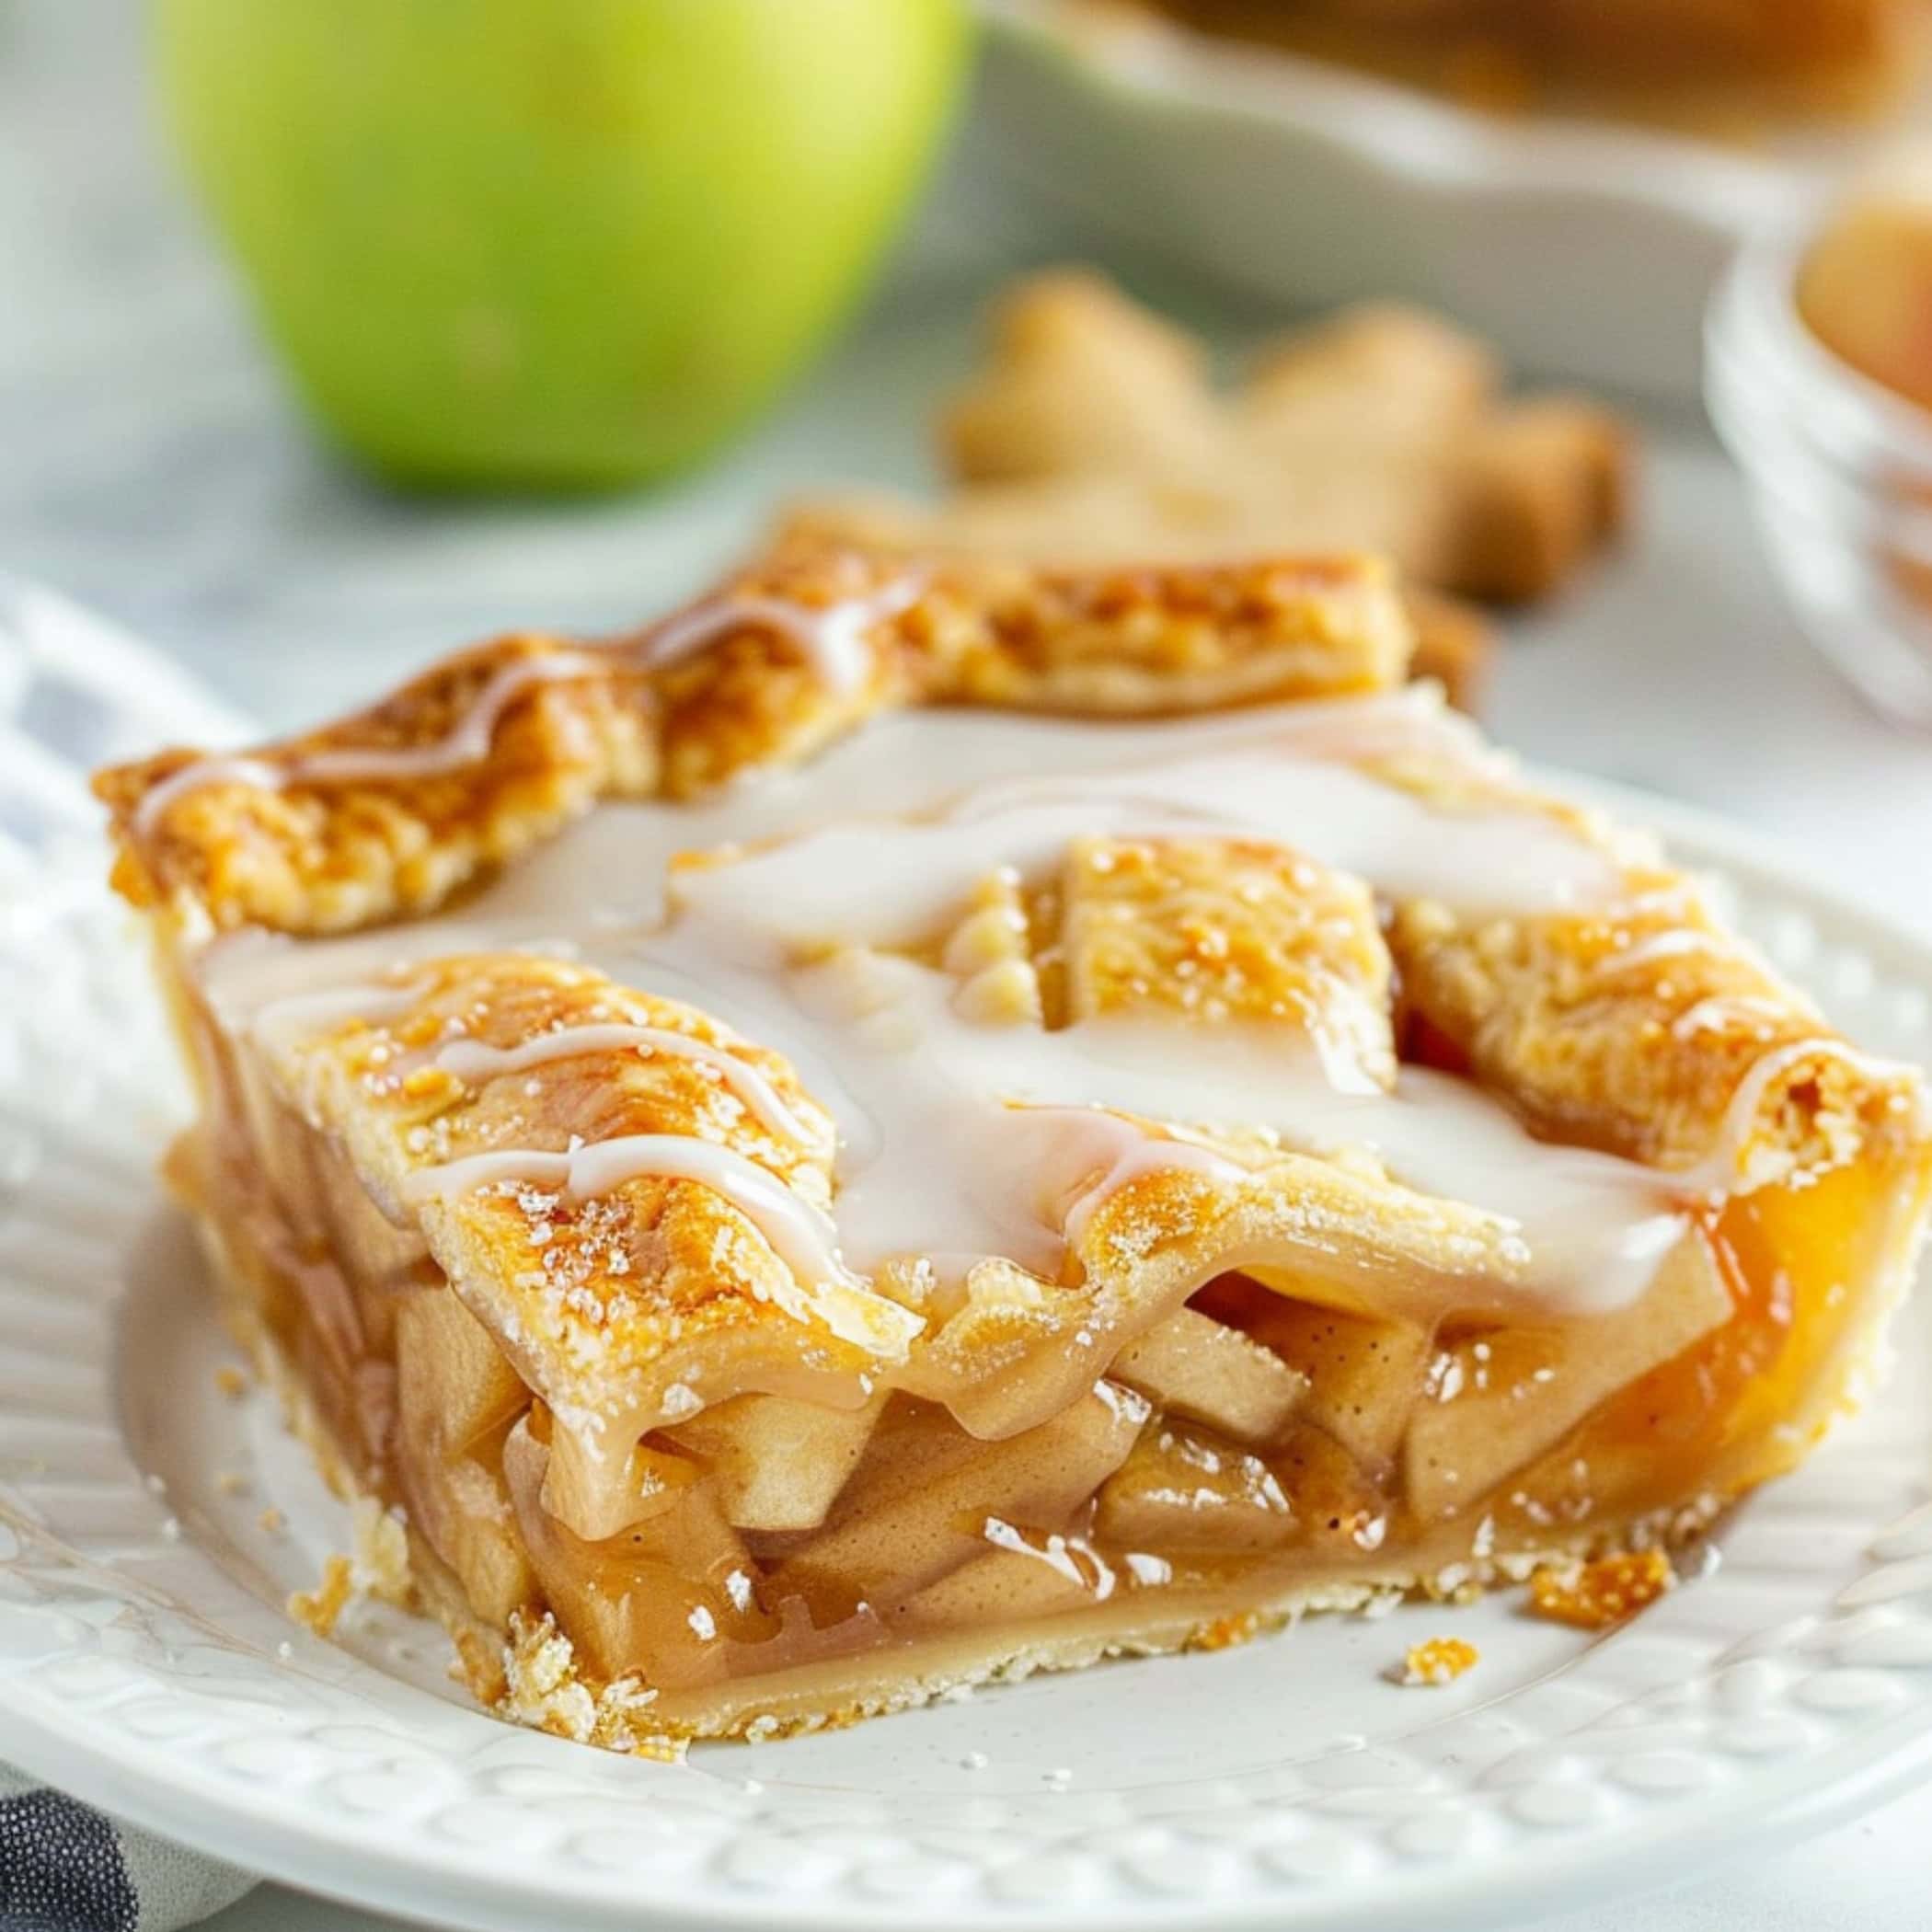 Apple slab pie slice in a white plate with sugar glaze.